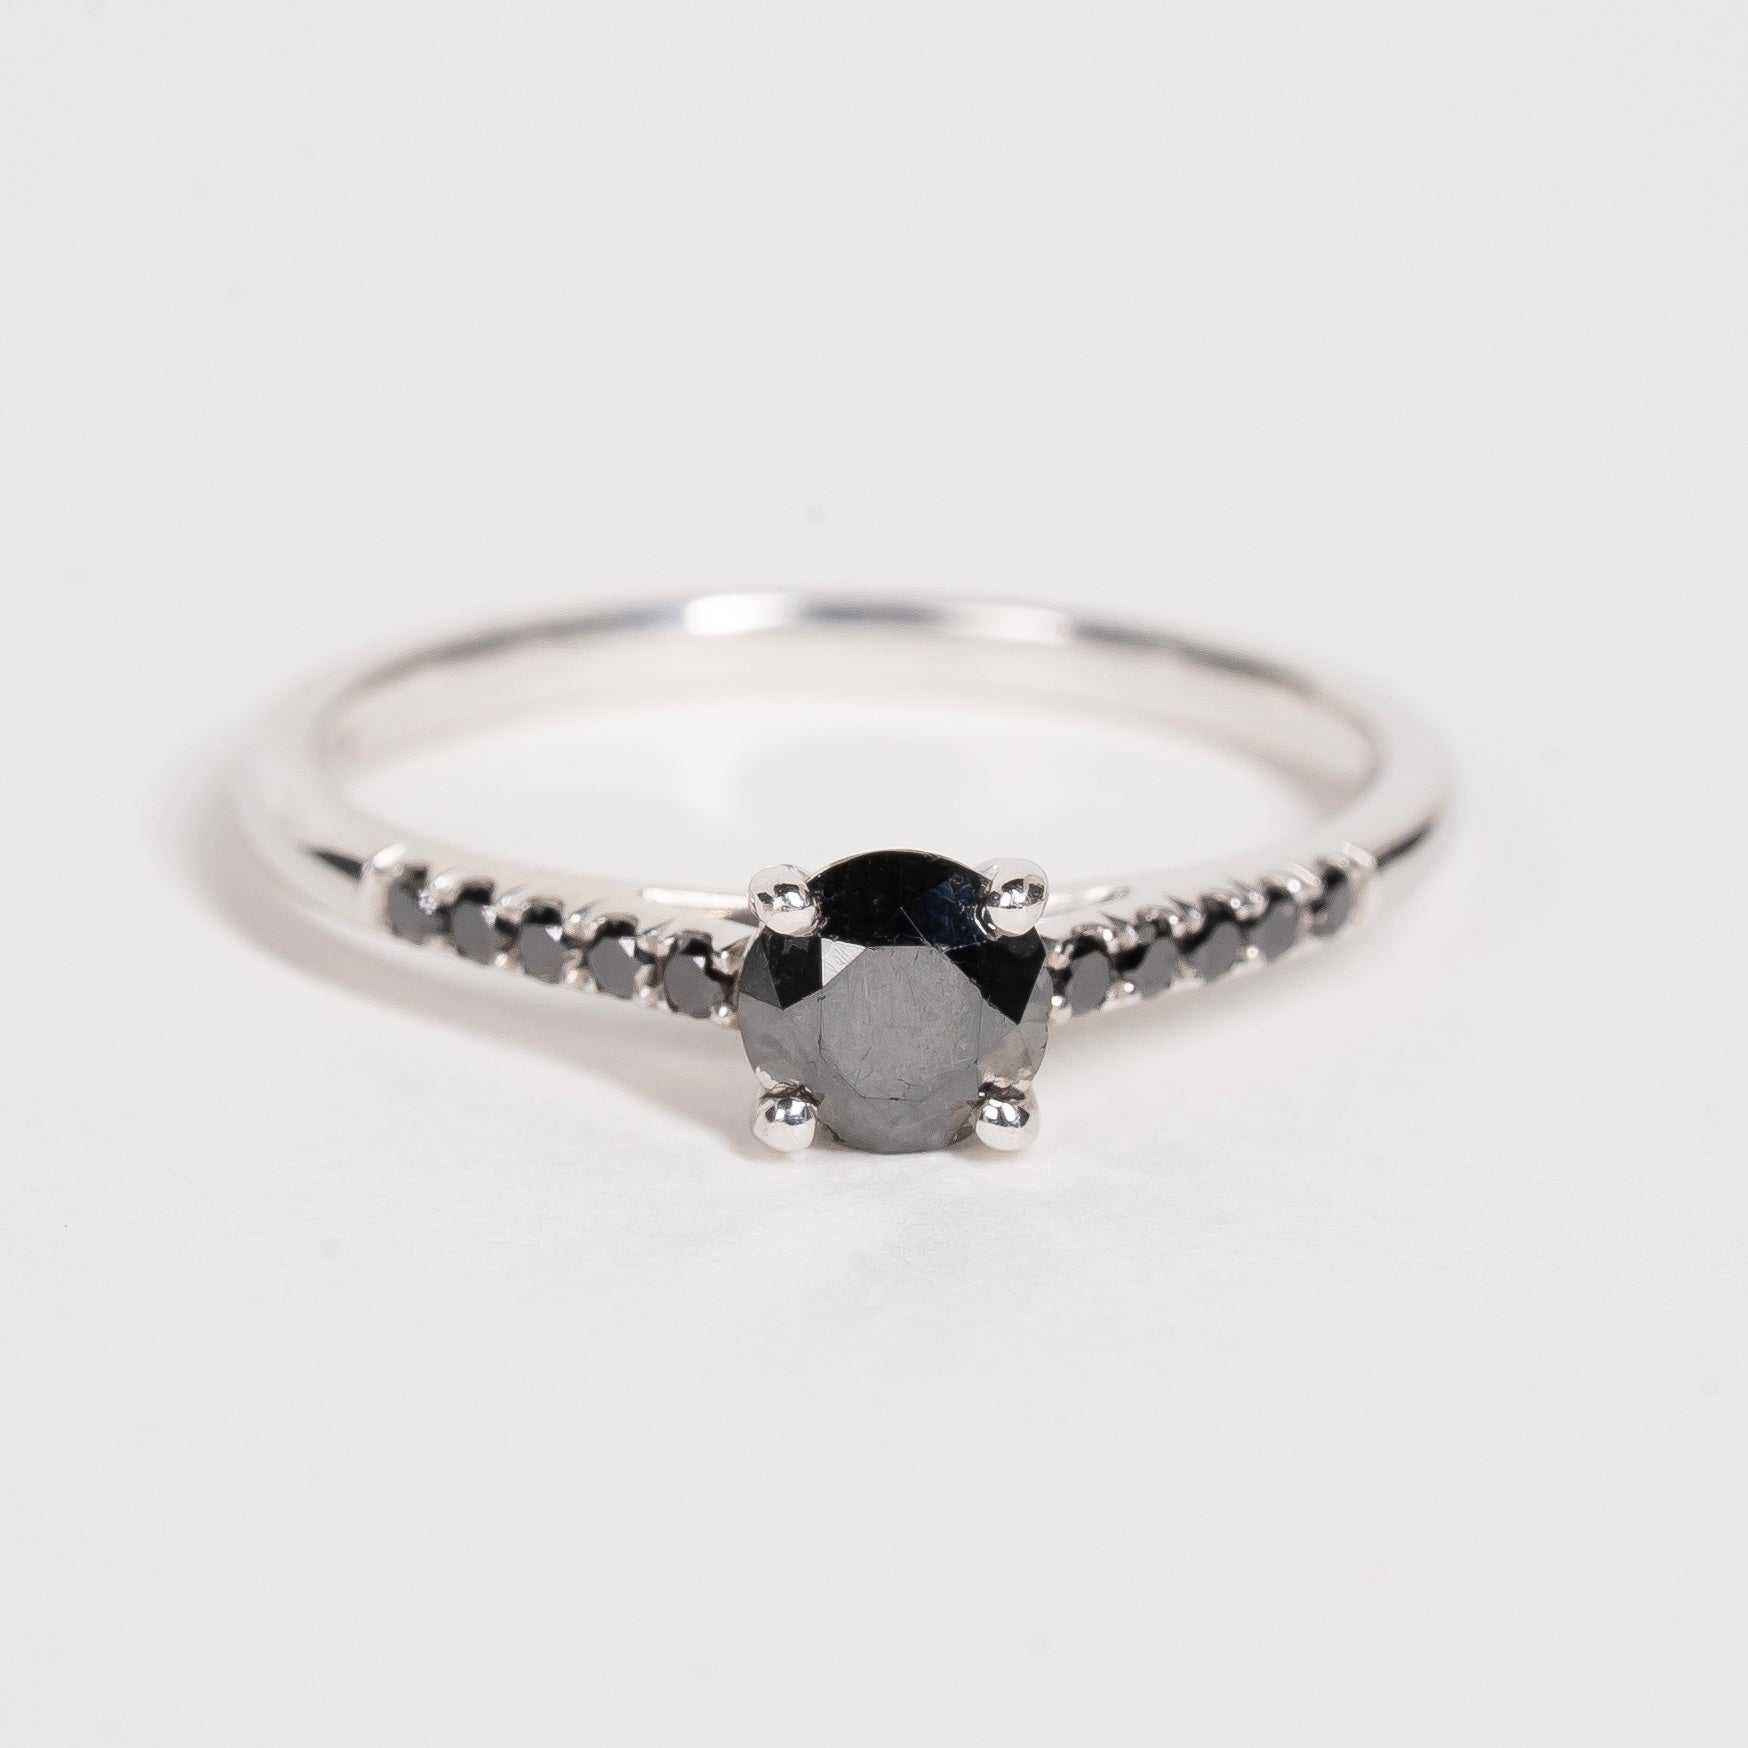 Alternative style engagement ring with black diamonds